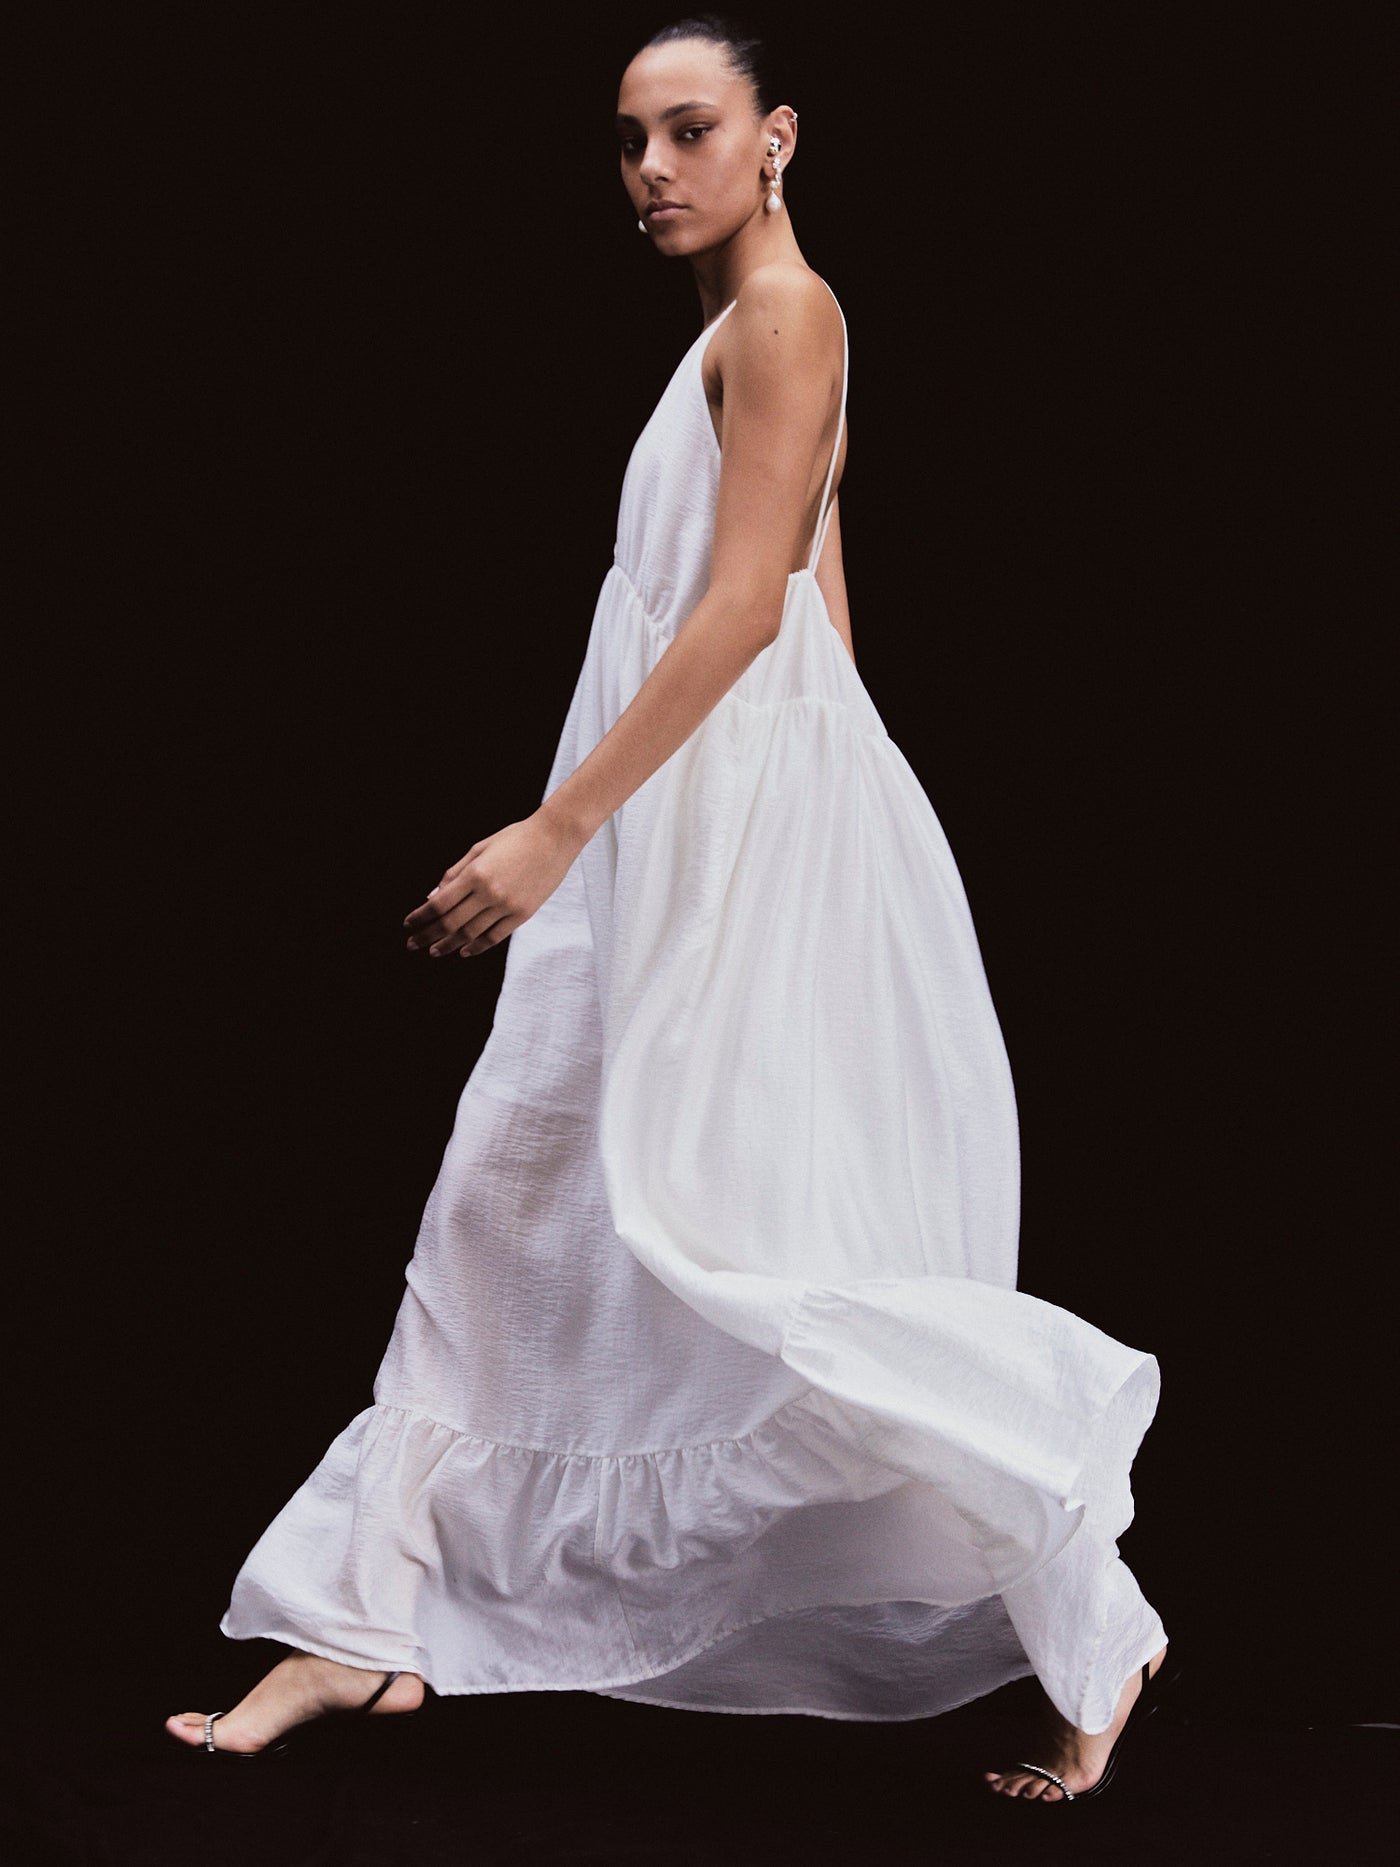 Koulika Dress in White